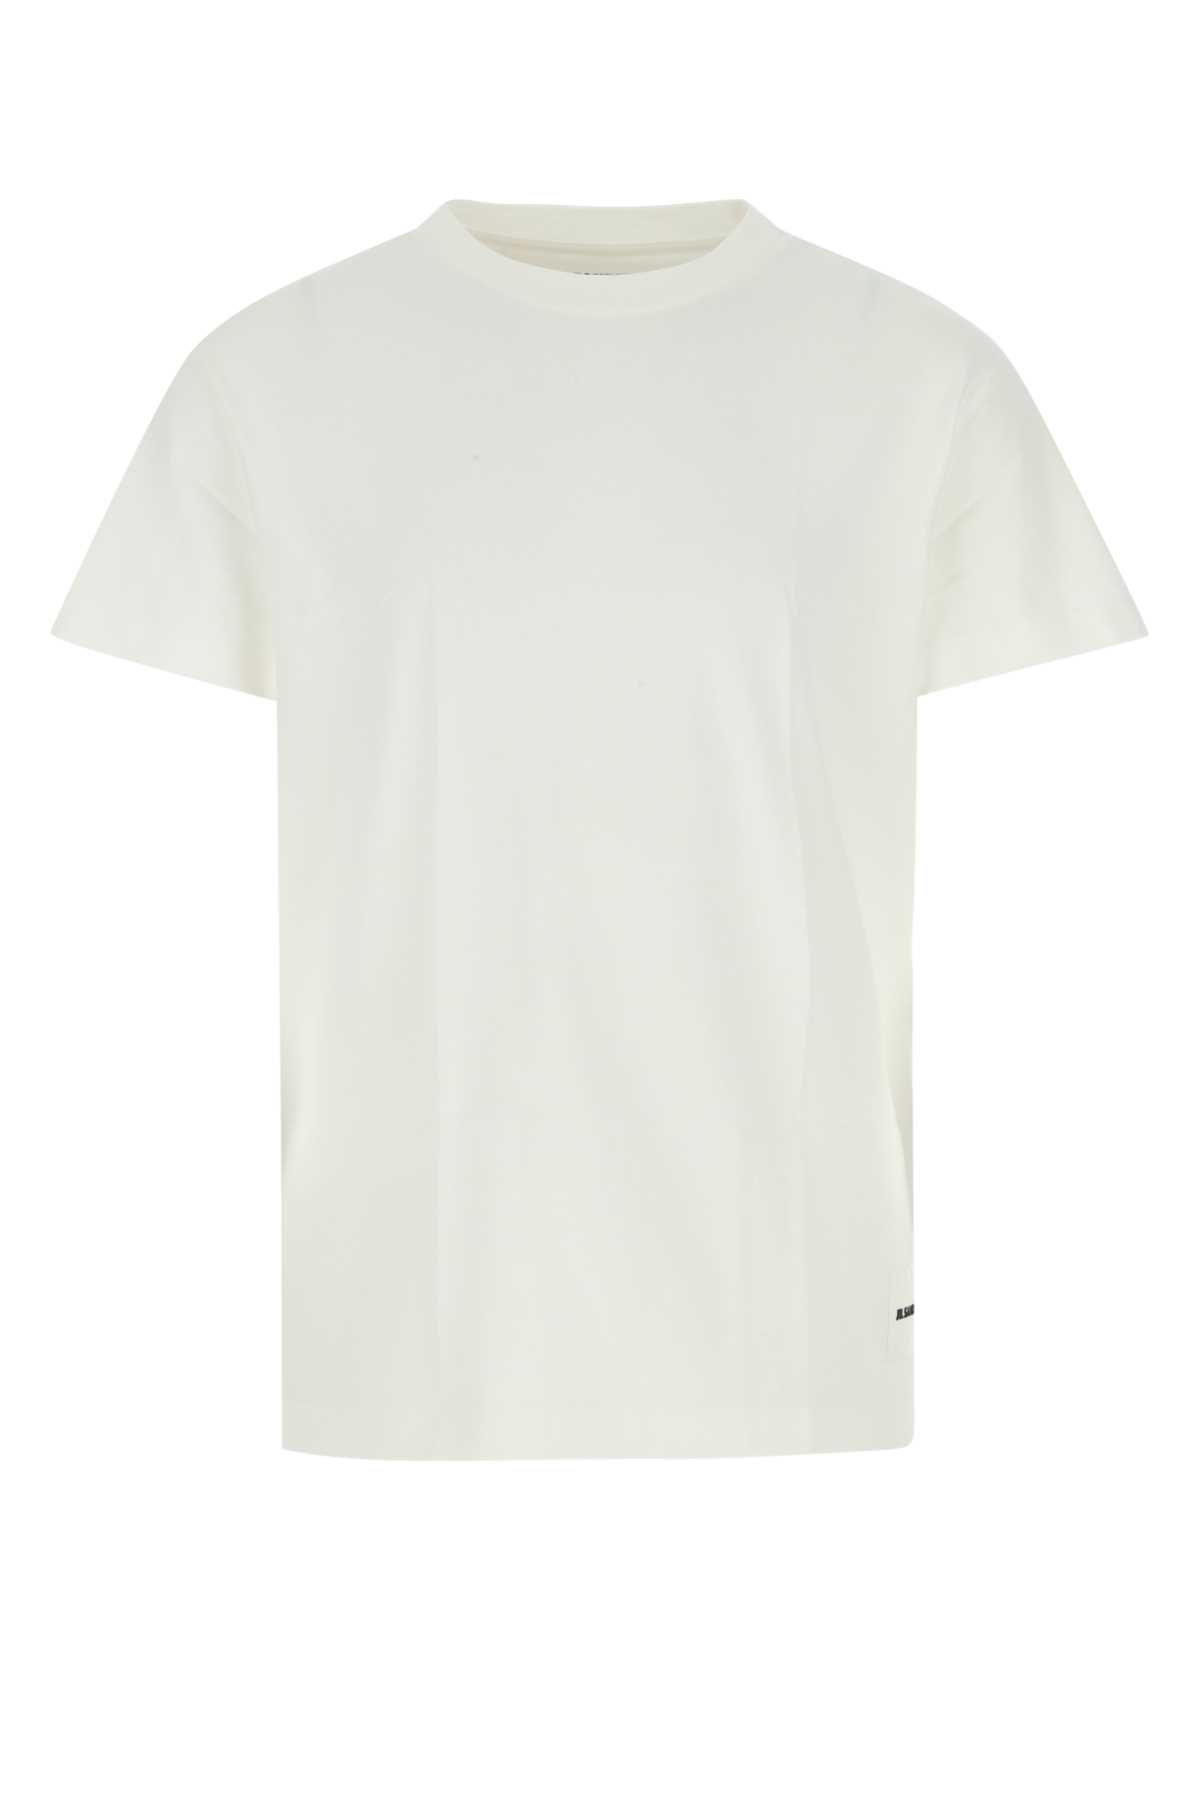 White Cotton T-shirt Set